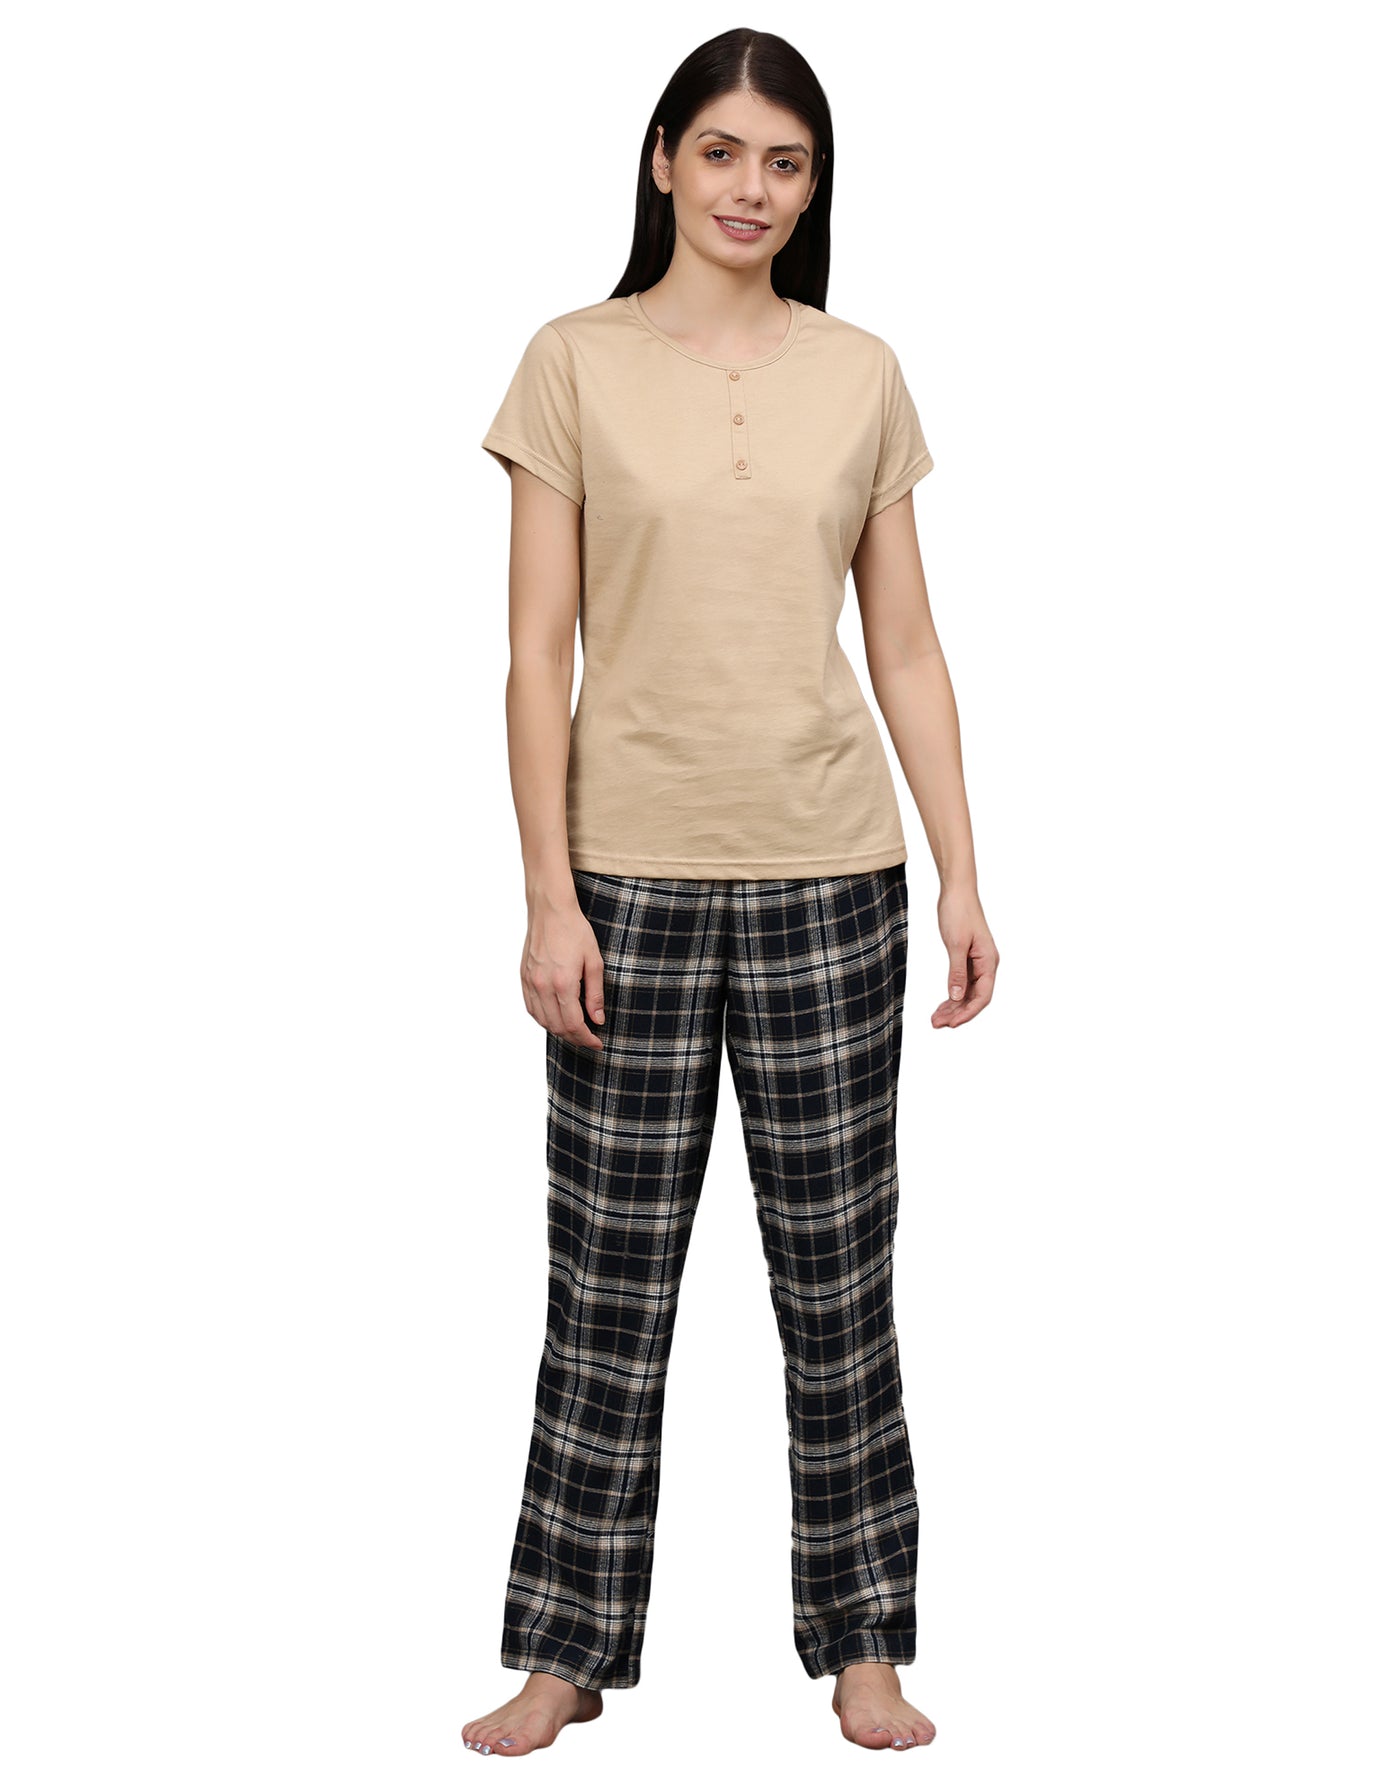 Pyjama Set for Women-Beige T-Shirt & Checked Pant